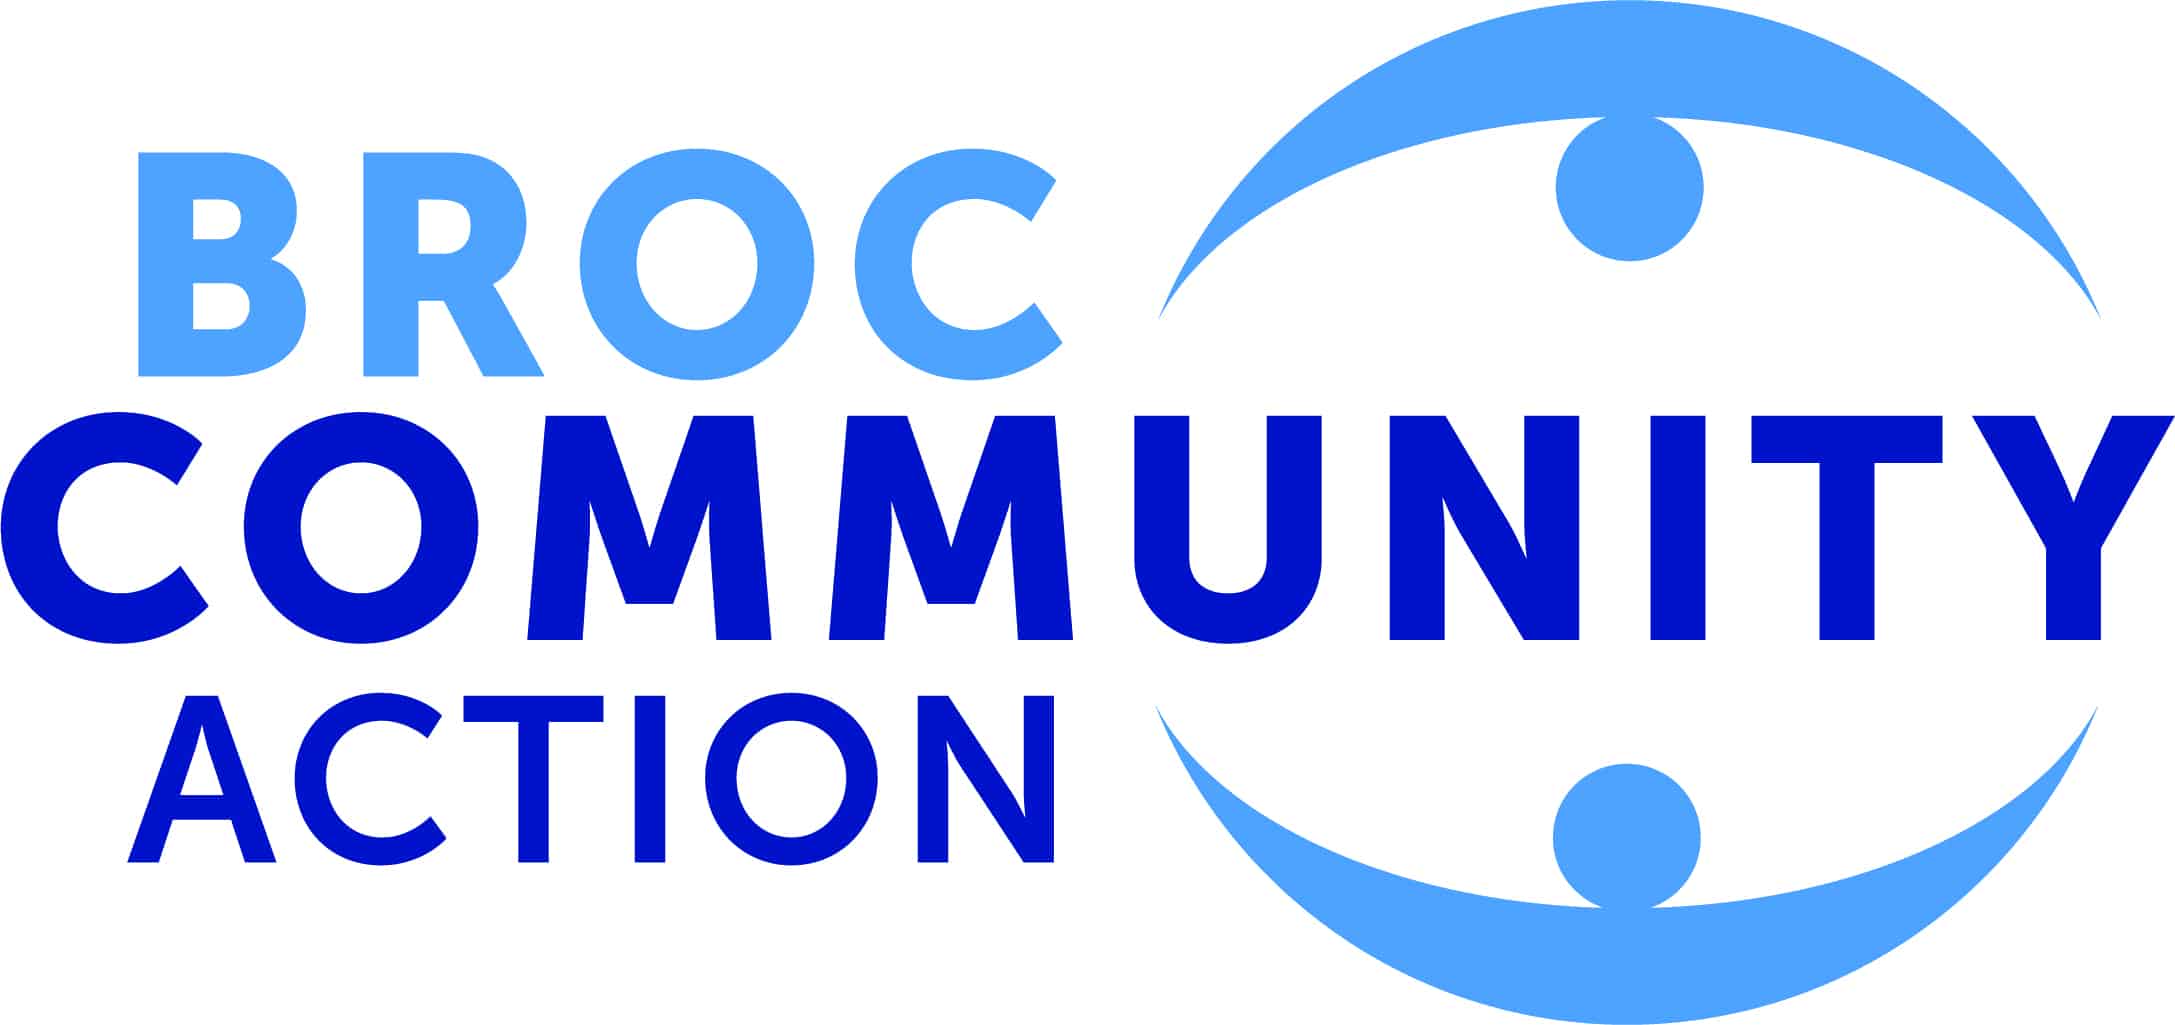 BROC Community Action